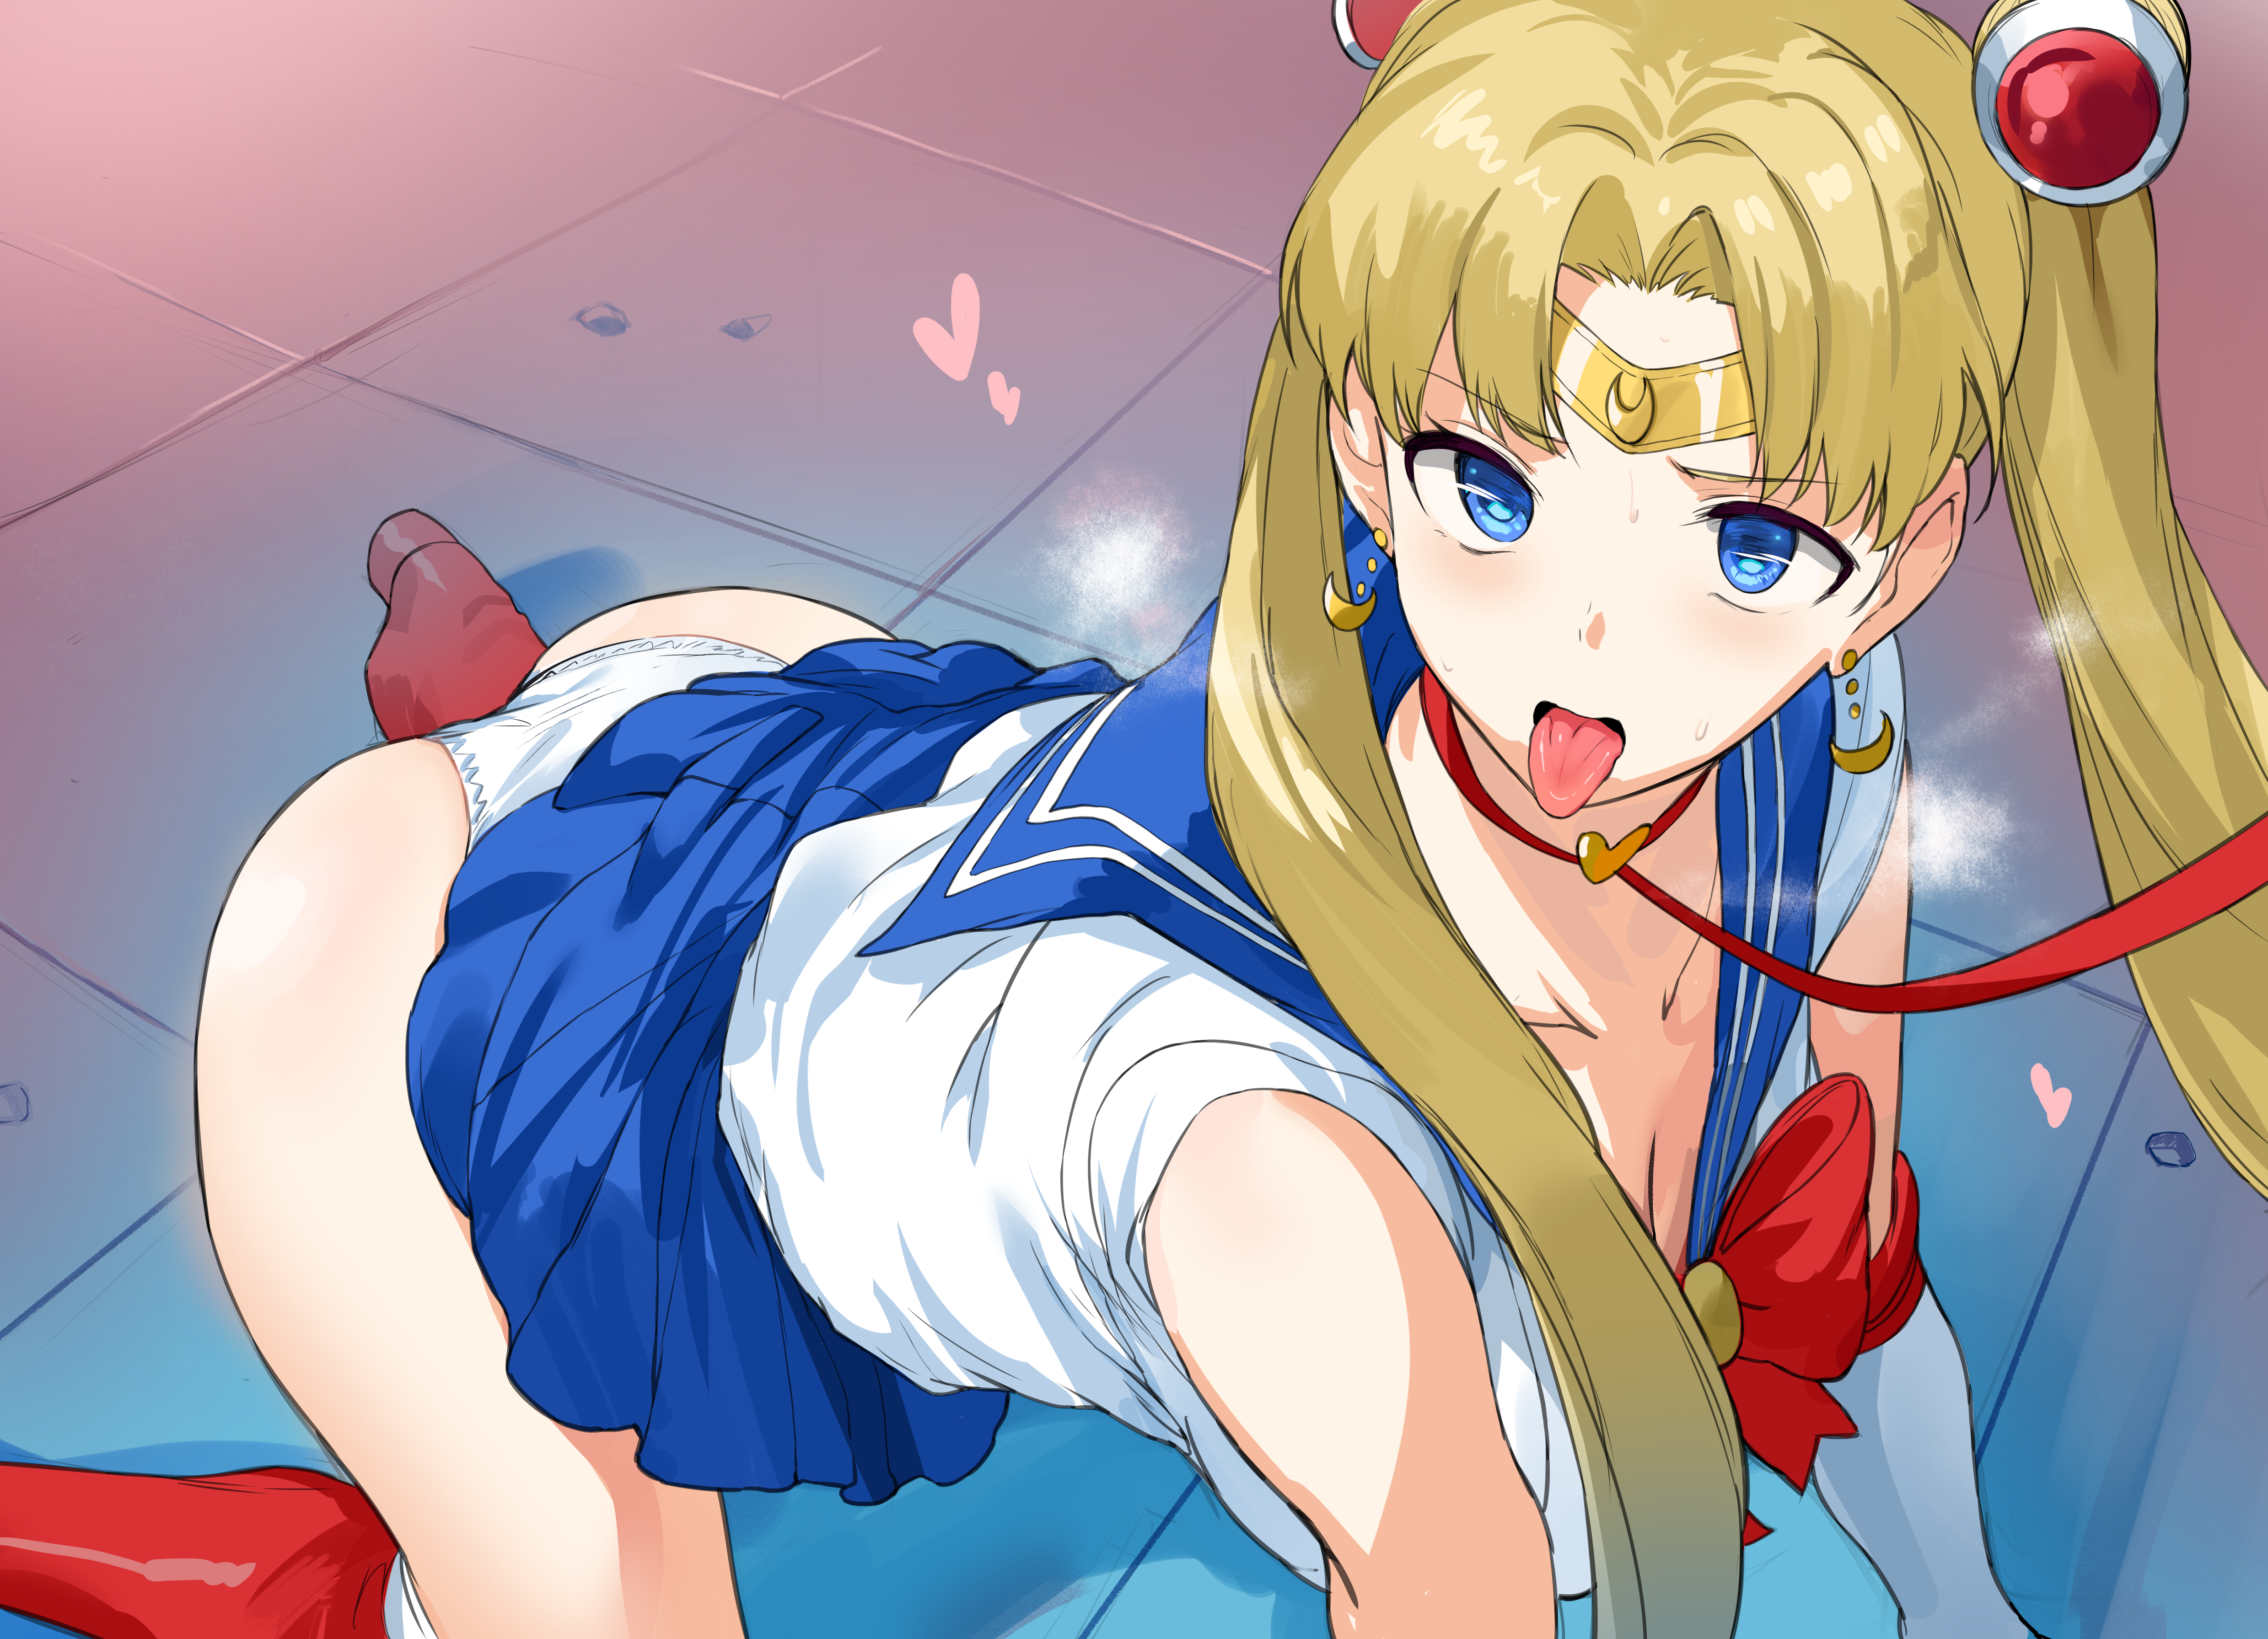 Anime 4958x3583 anime anime girls digital art artwork 2D portrait Sailor Moon ass bent over Tsukino Usagi collar leash panties tongue out blue eyes blonde twintails Hews sailor uniform